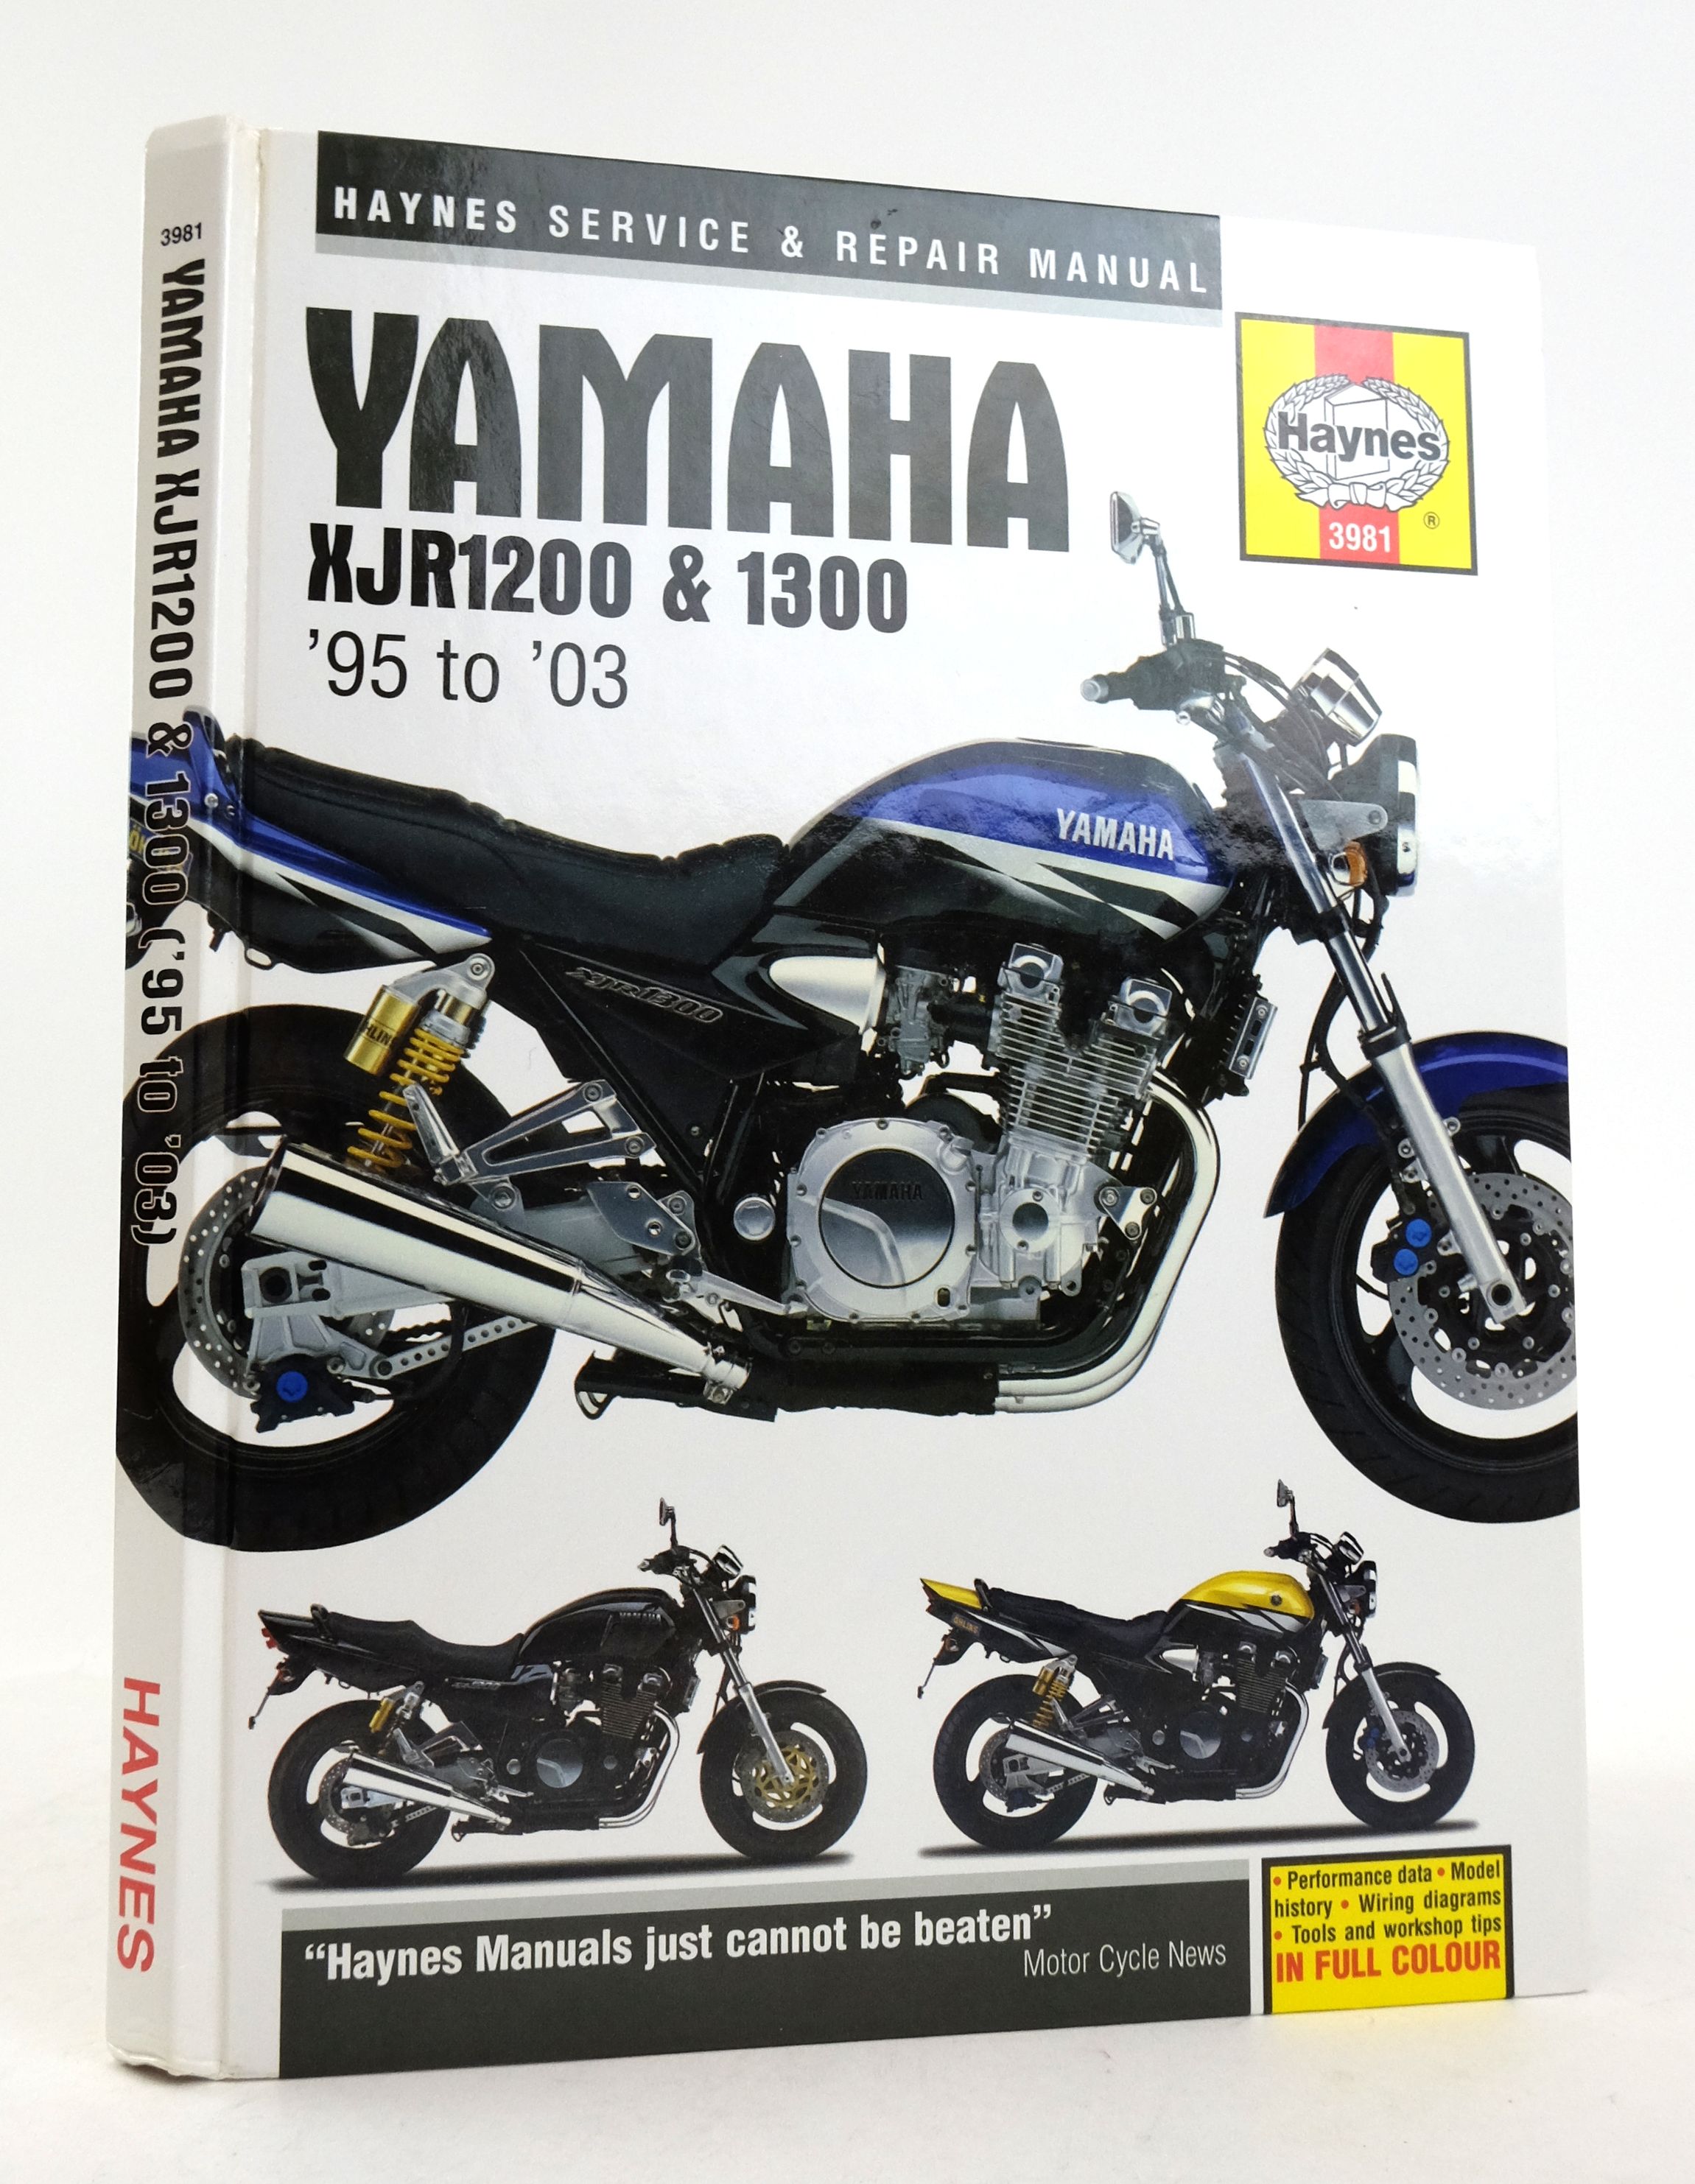 Yamaha XJR1200 & 1300: Service and Repair Manual